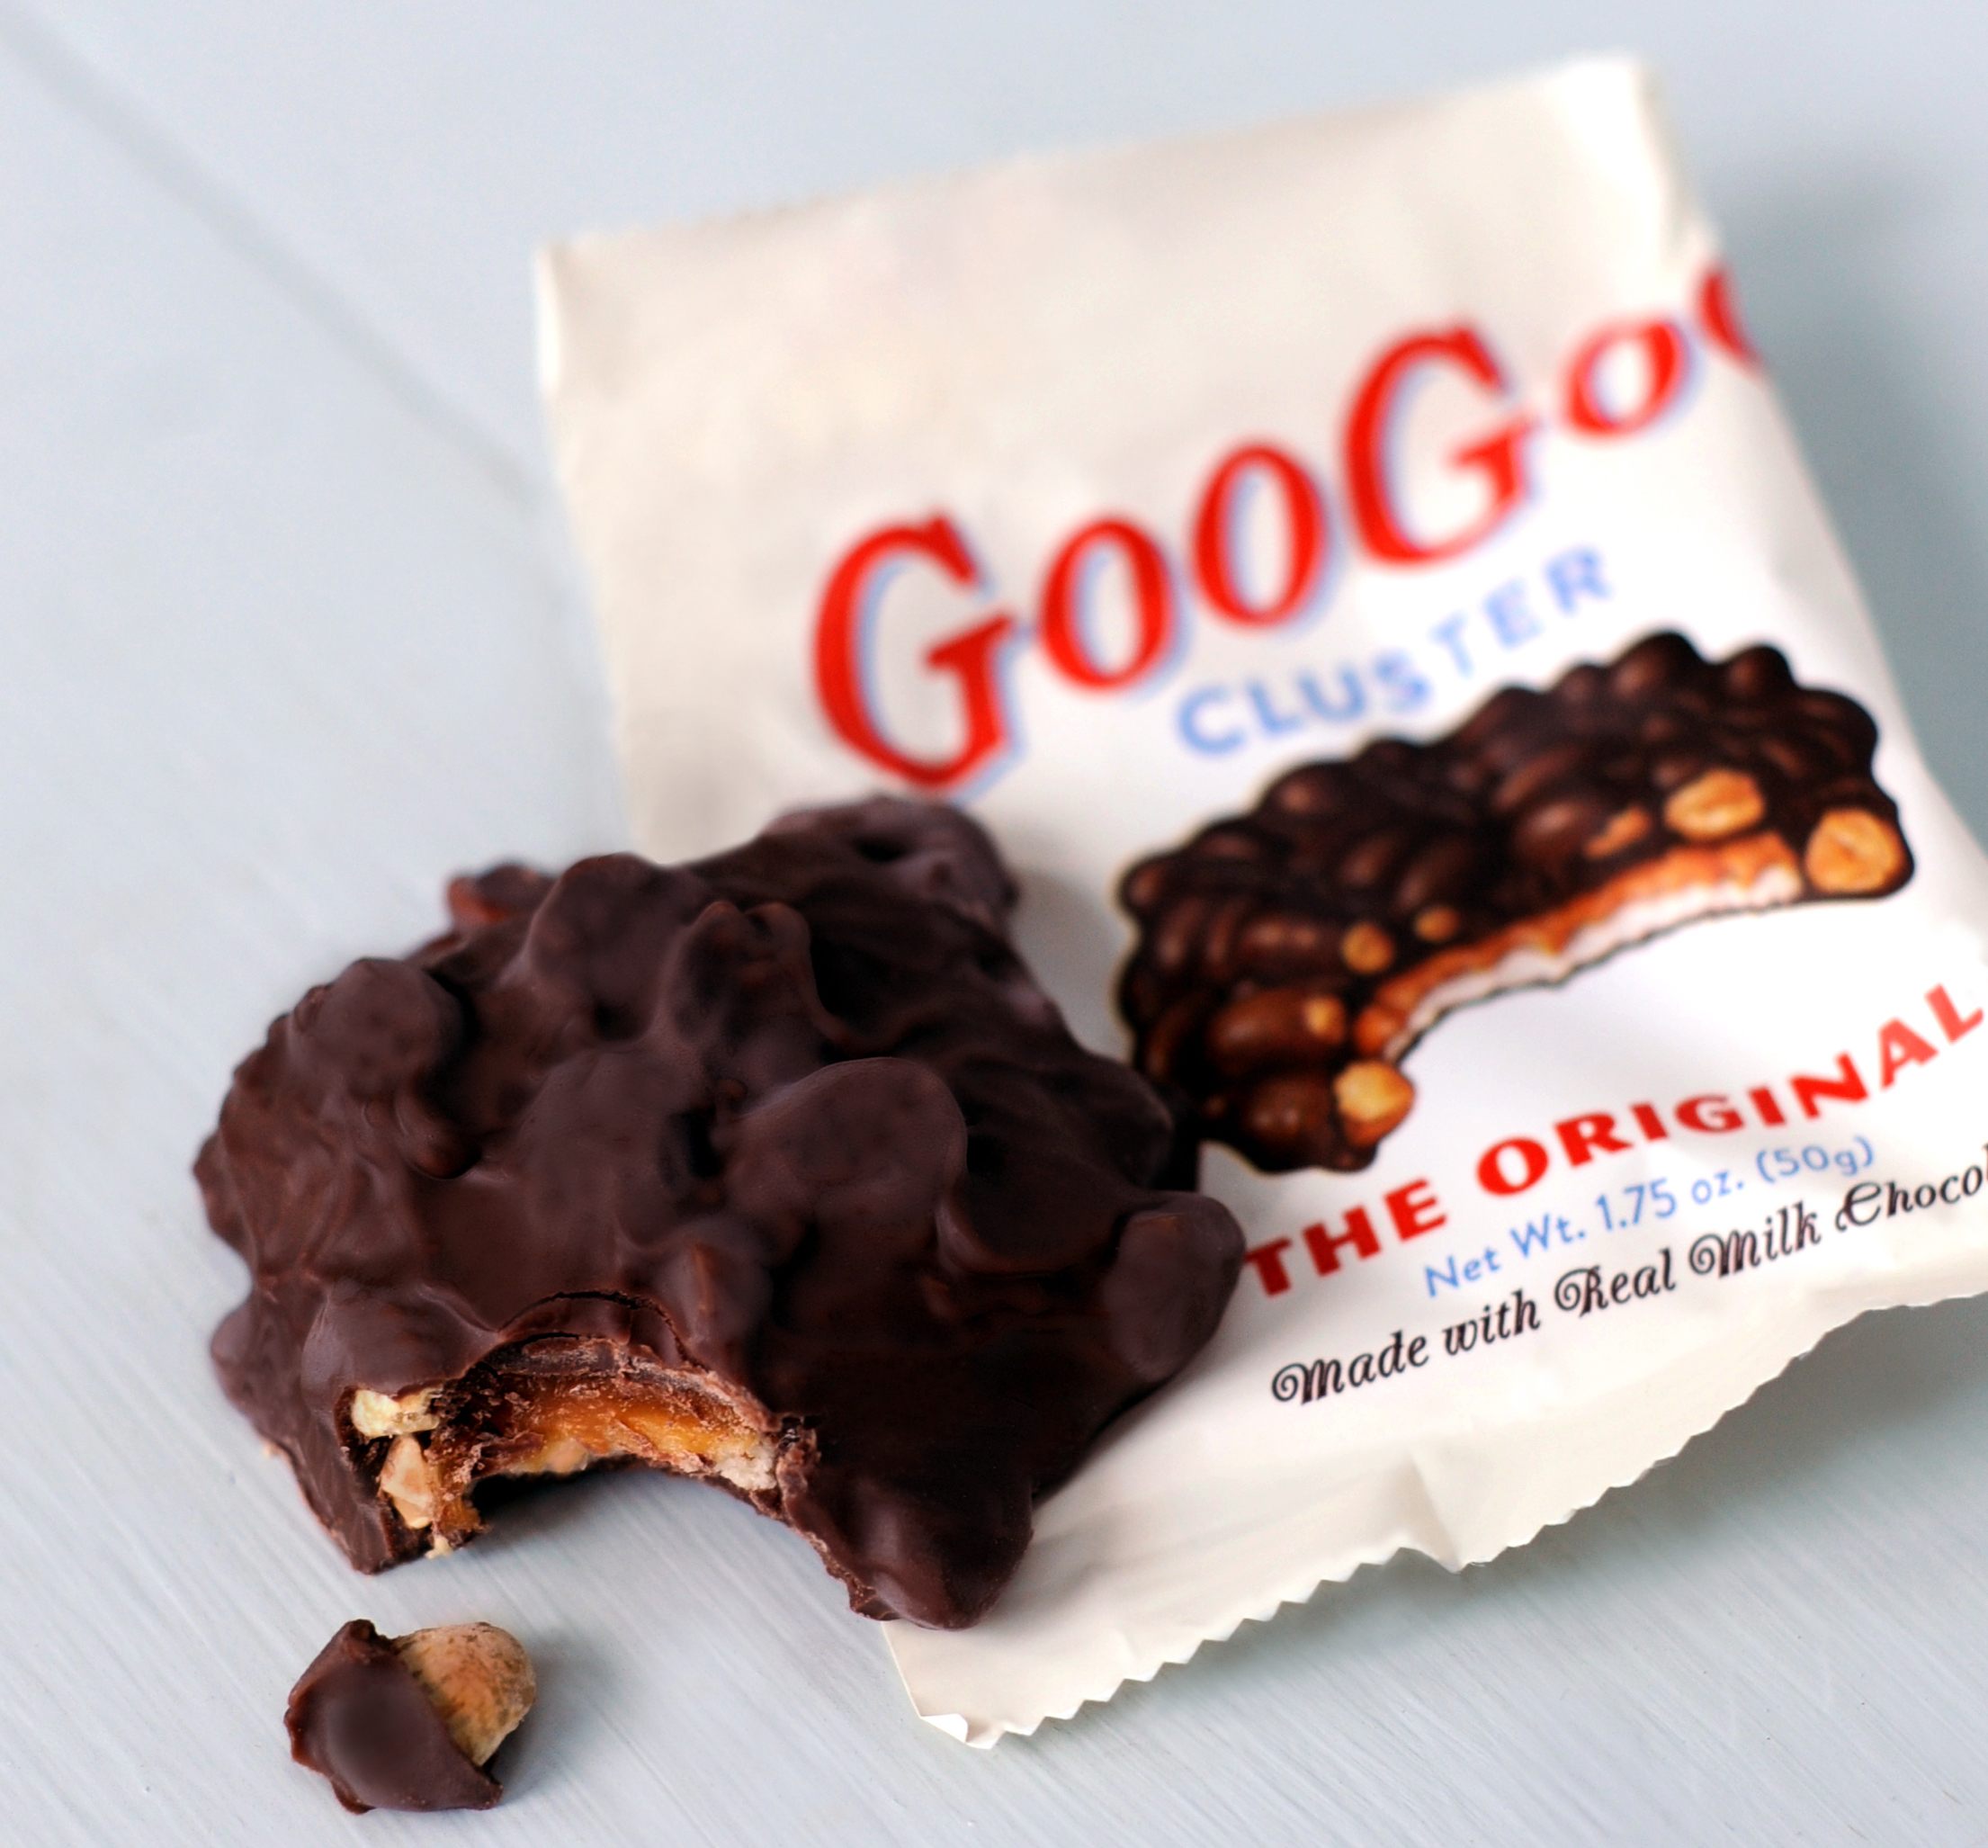 Goo Goo Summer Pop-Ups - Goo Goo Cluster